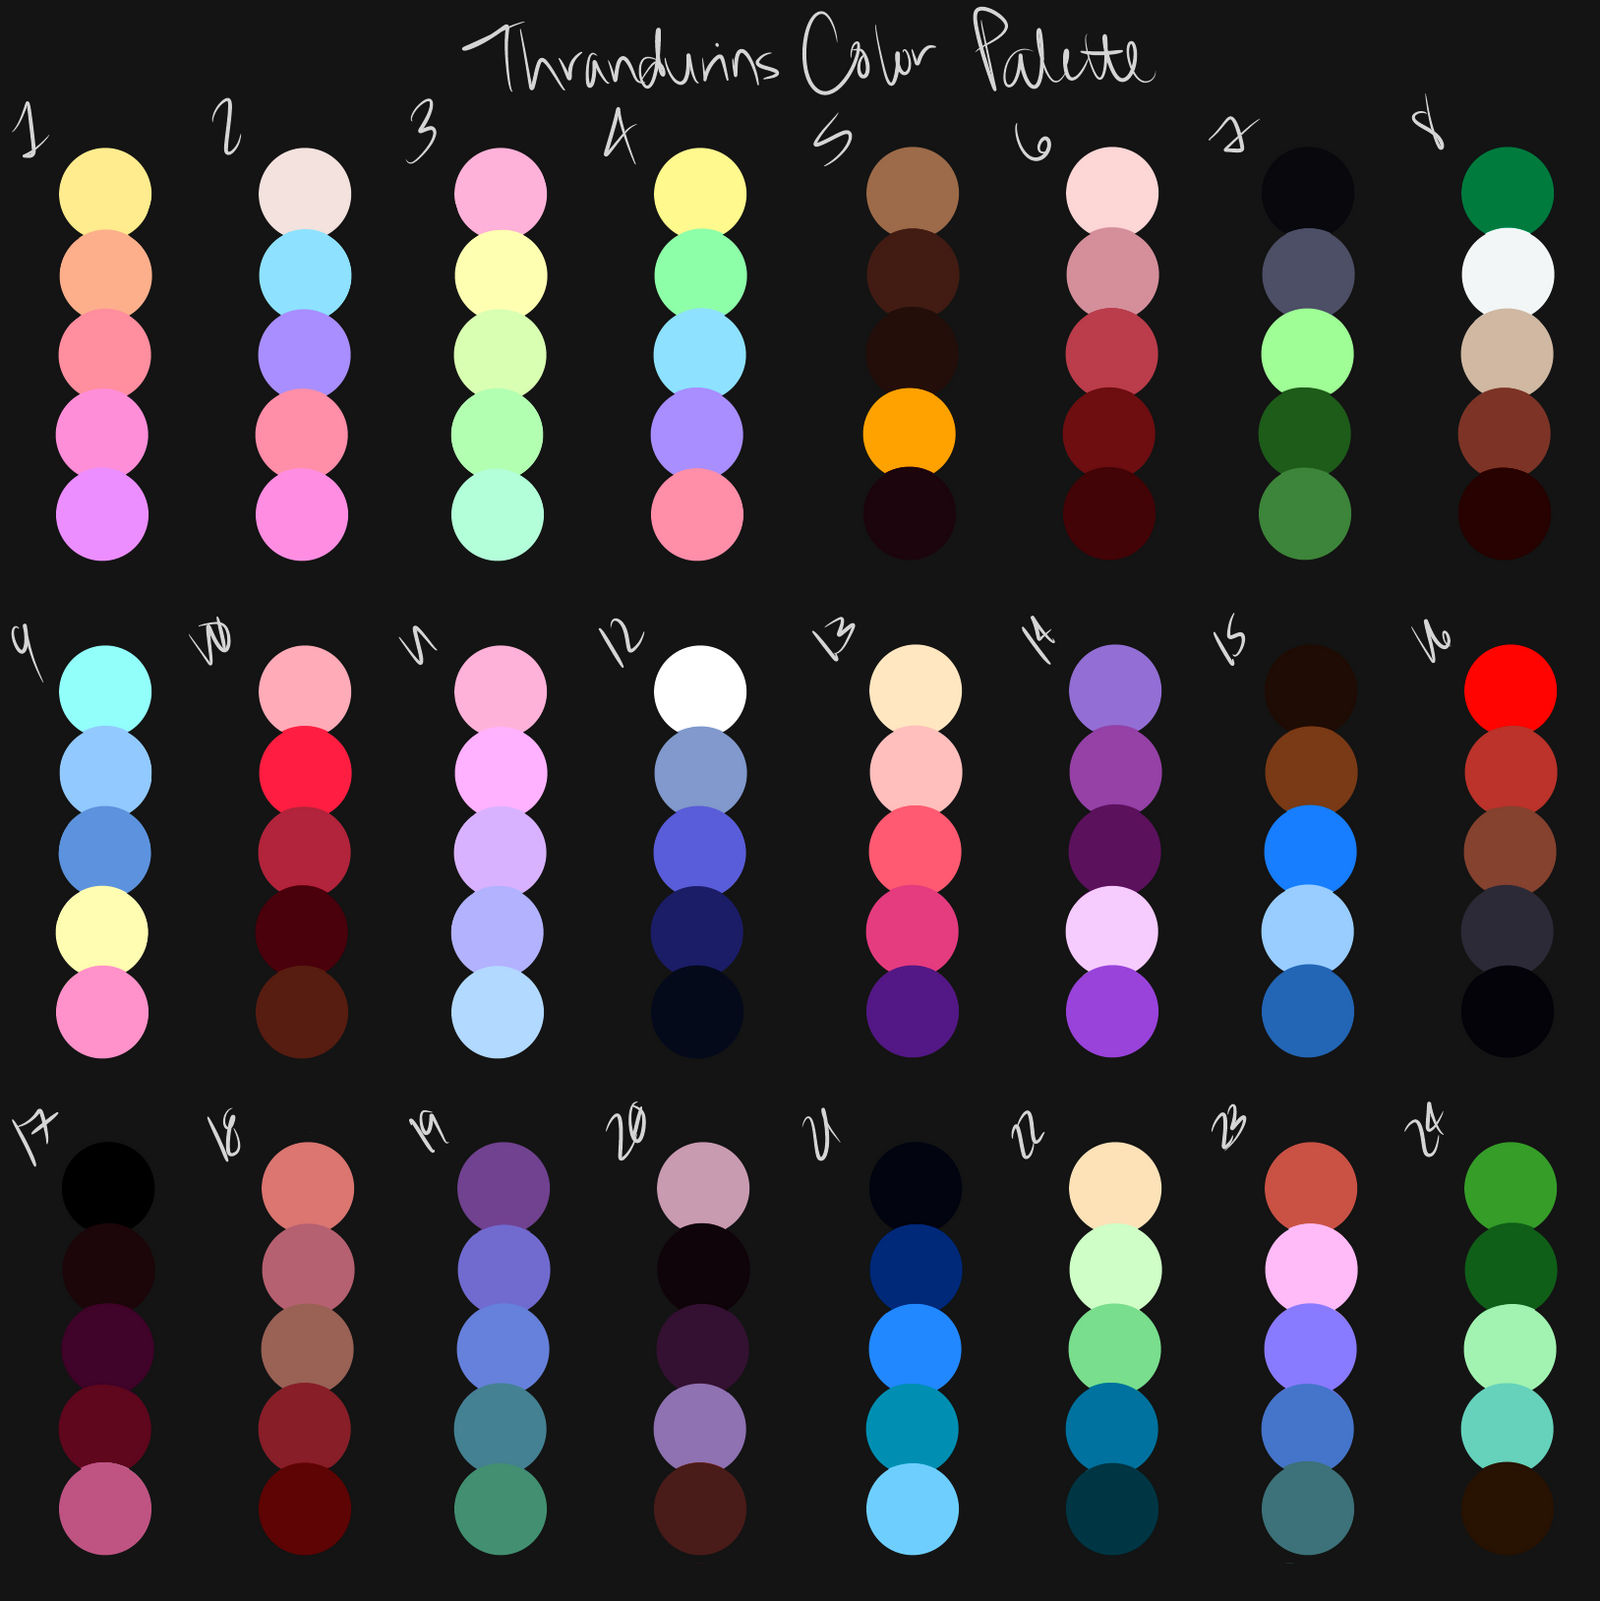 Color Palette Challenge by thrandurins on DeviantArt